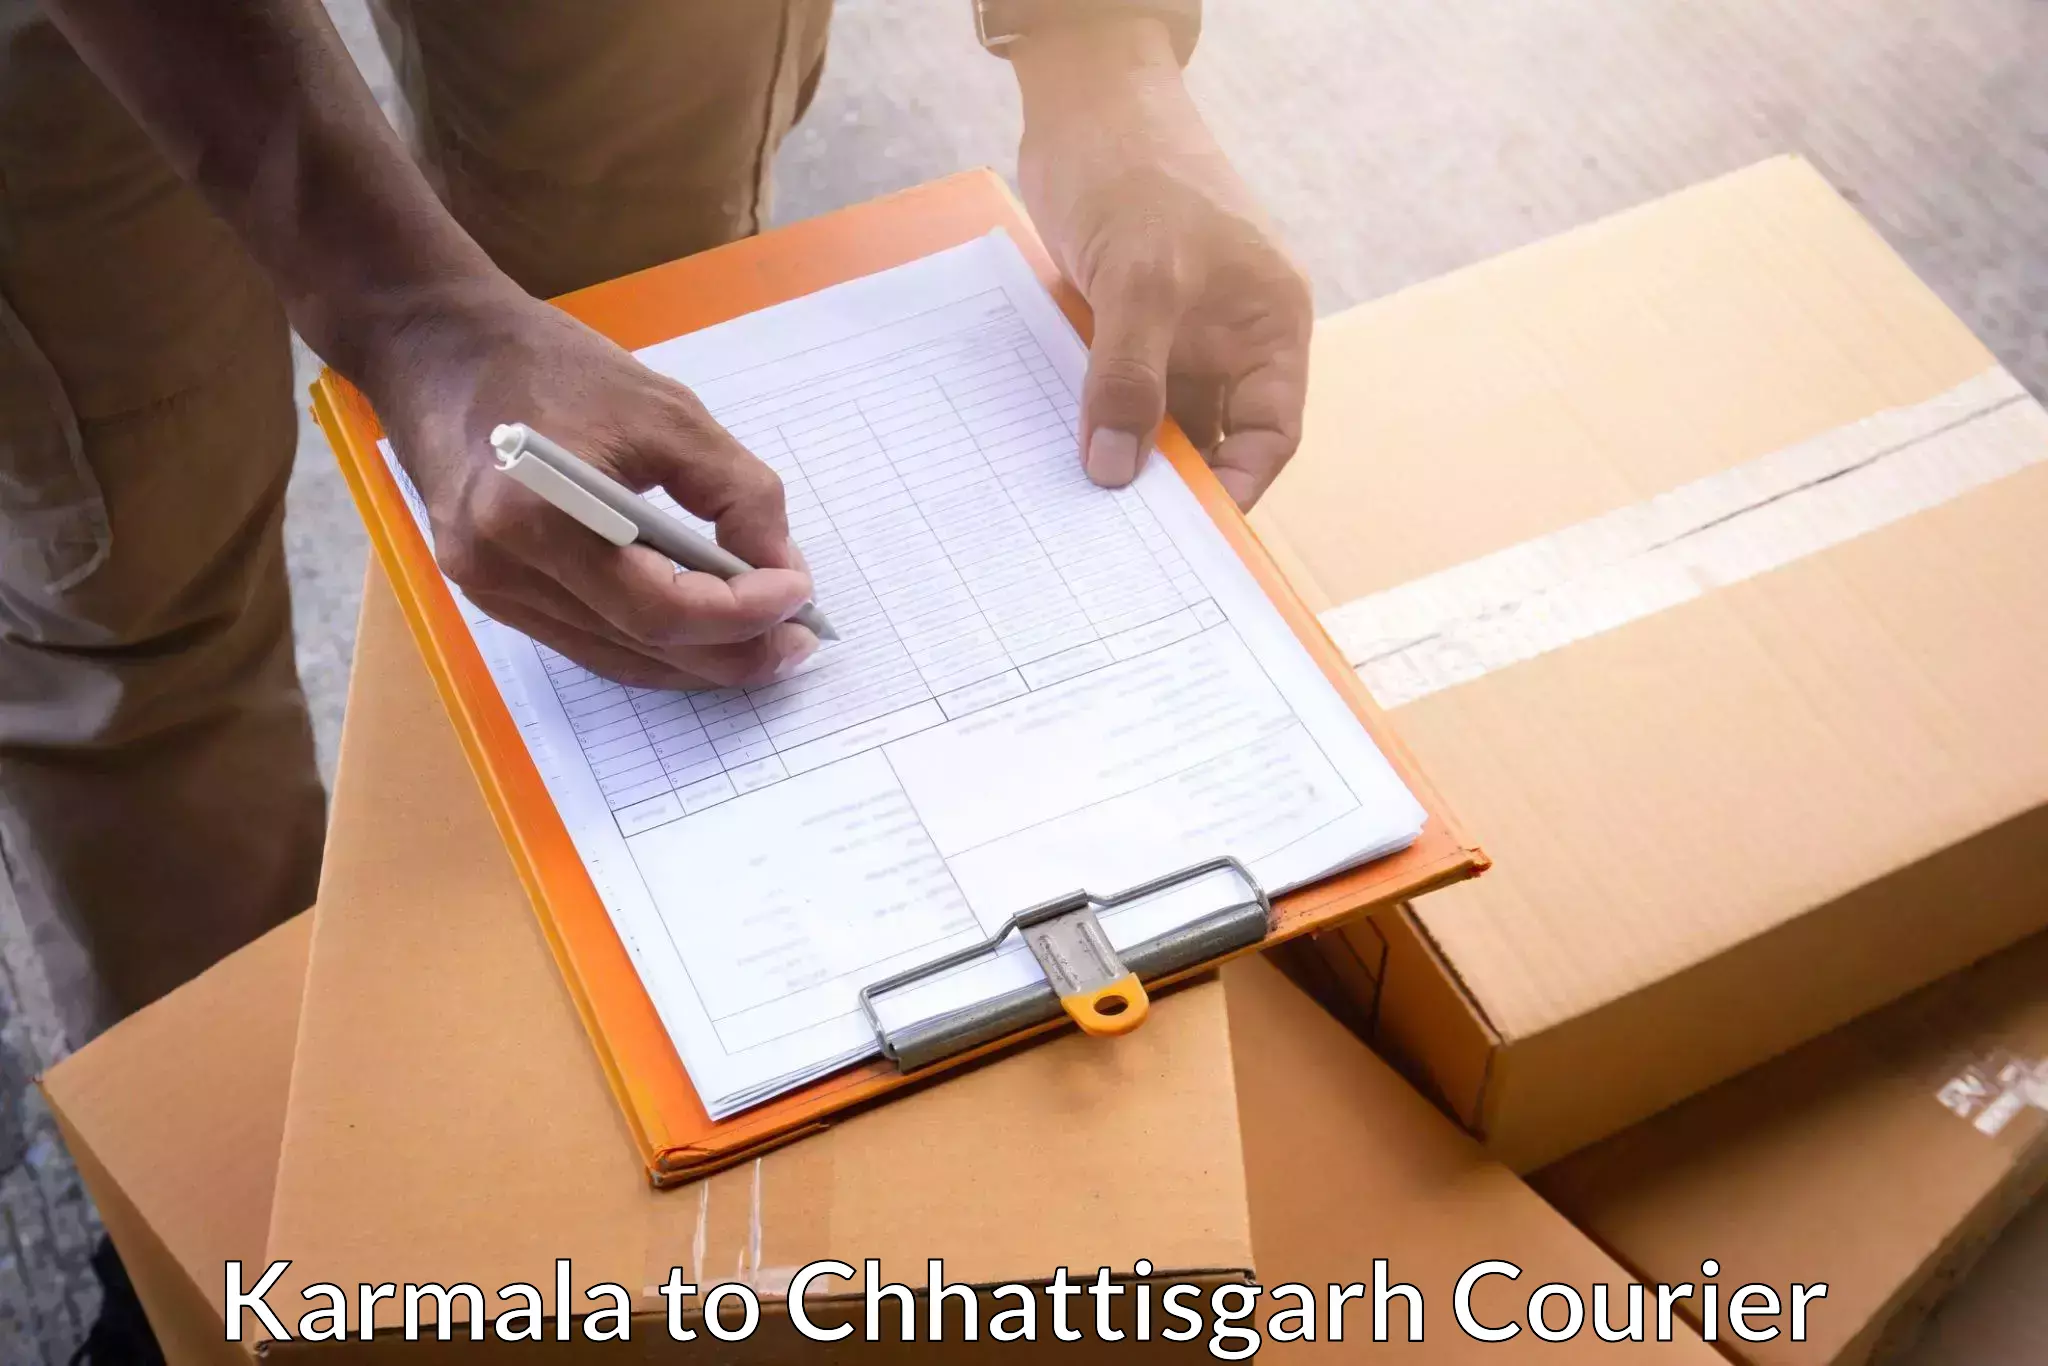 Supply chain efficiency Karmala to Chhattisgarh